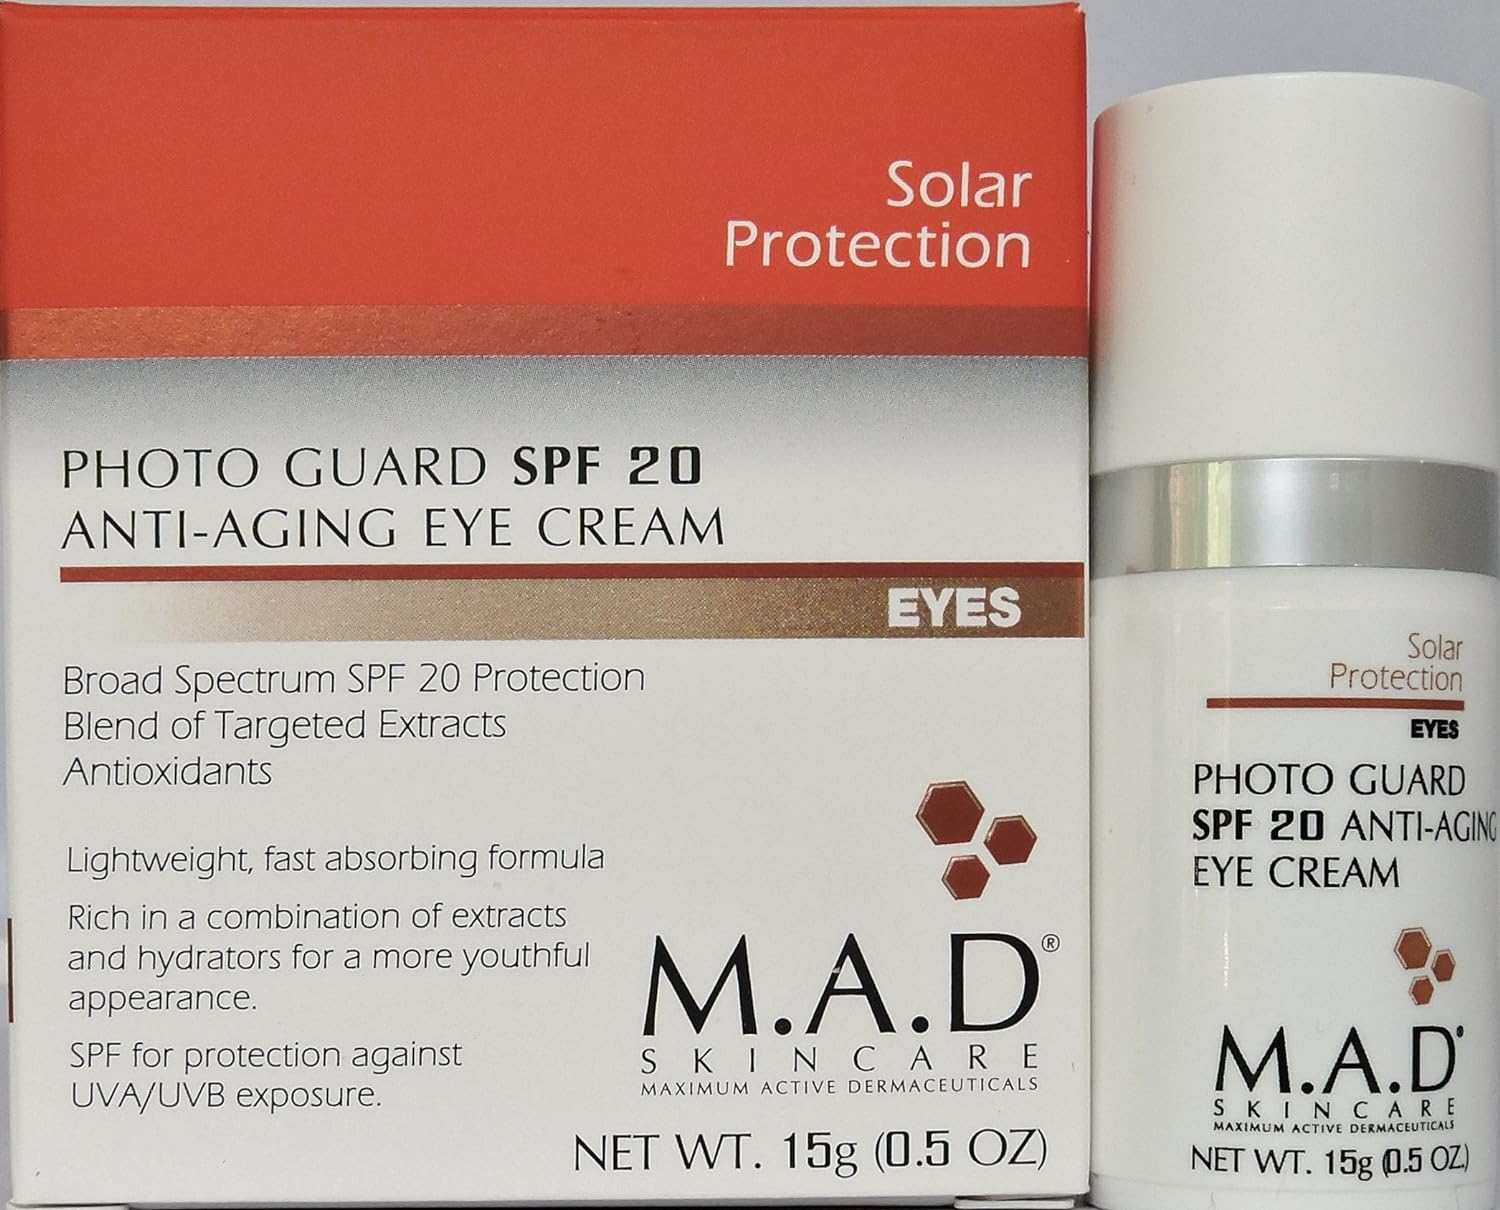 M.A.D SKINCARE SOLAR PROTECTION: Photo Guard SPF 20 Anti Aging Eye Cream - 15g